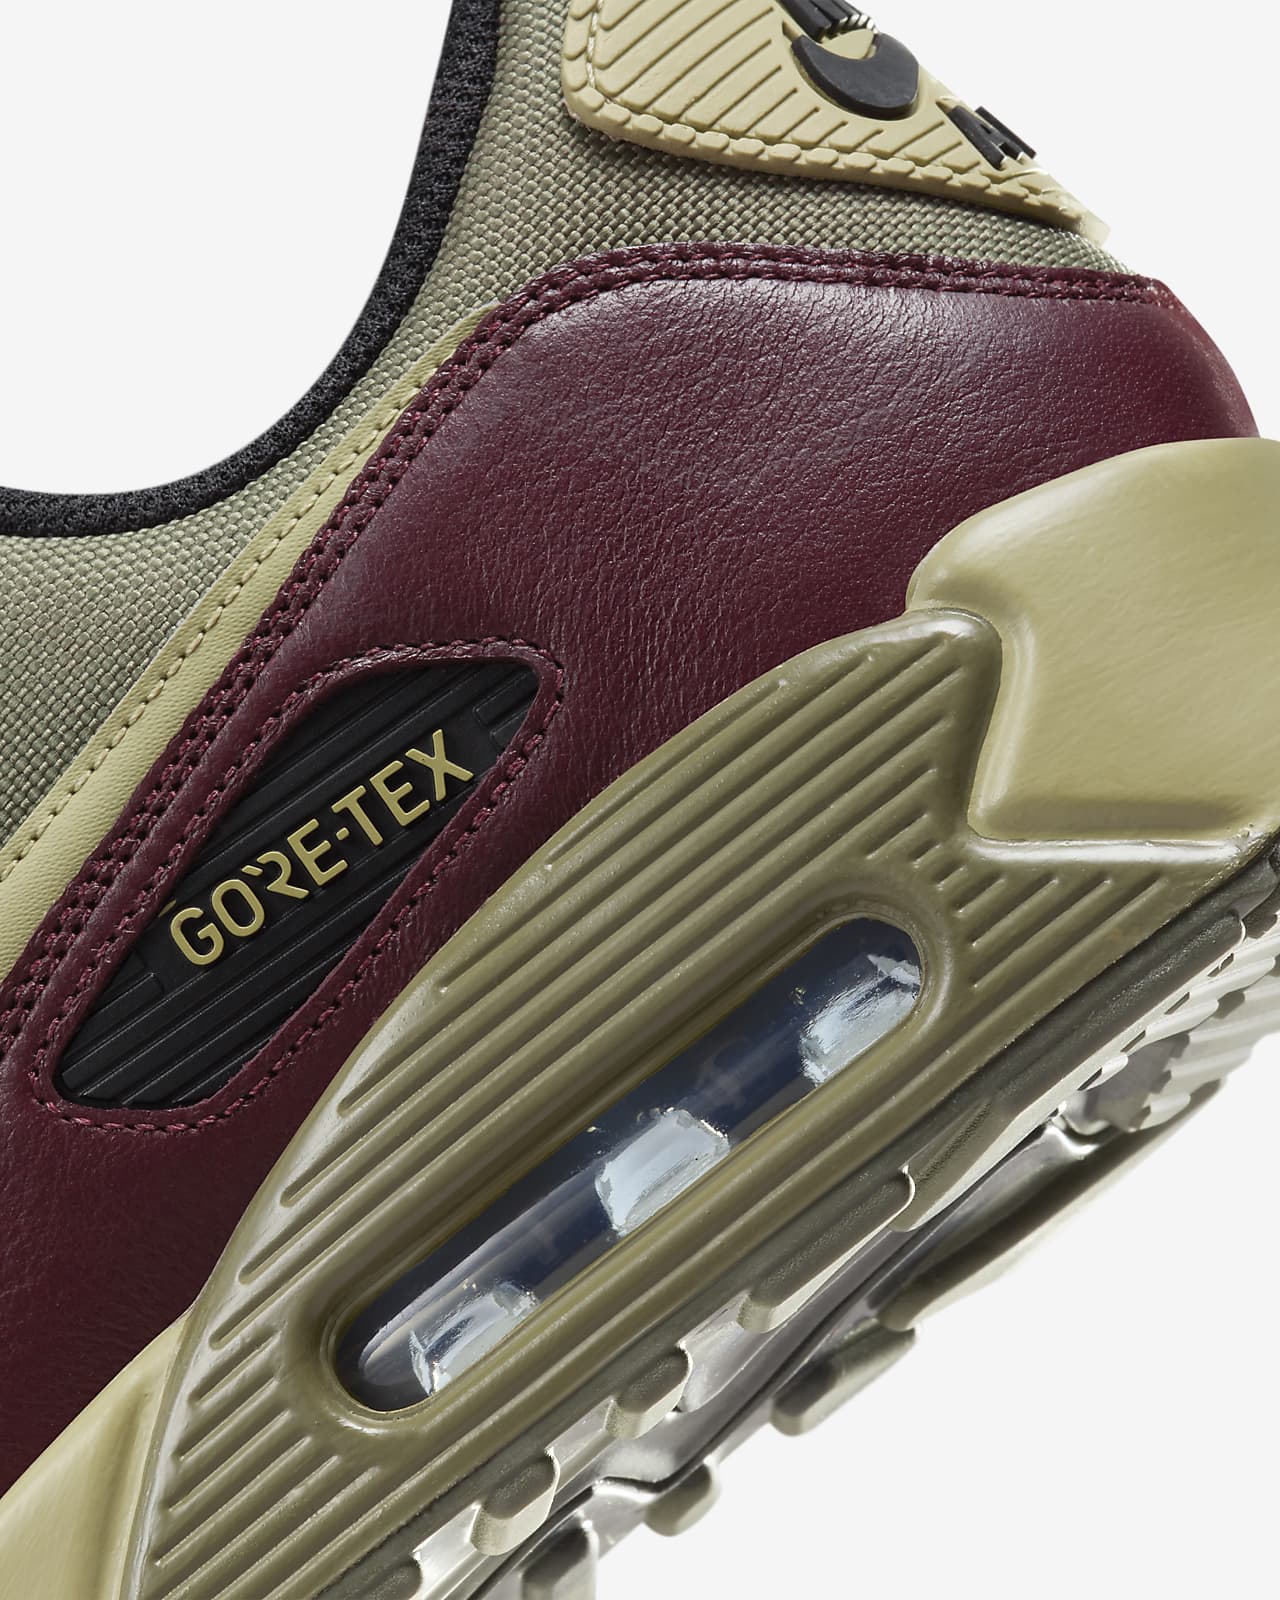 Sneakerhead Alert: Nike Air Max 90 GORE-TEX Men's Shoes Review – Is It ...